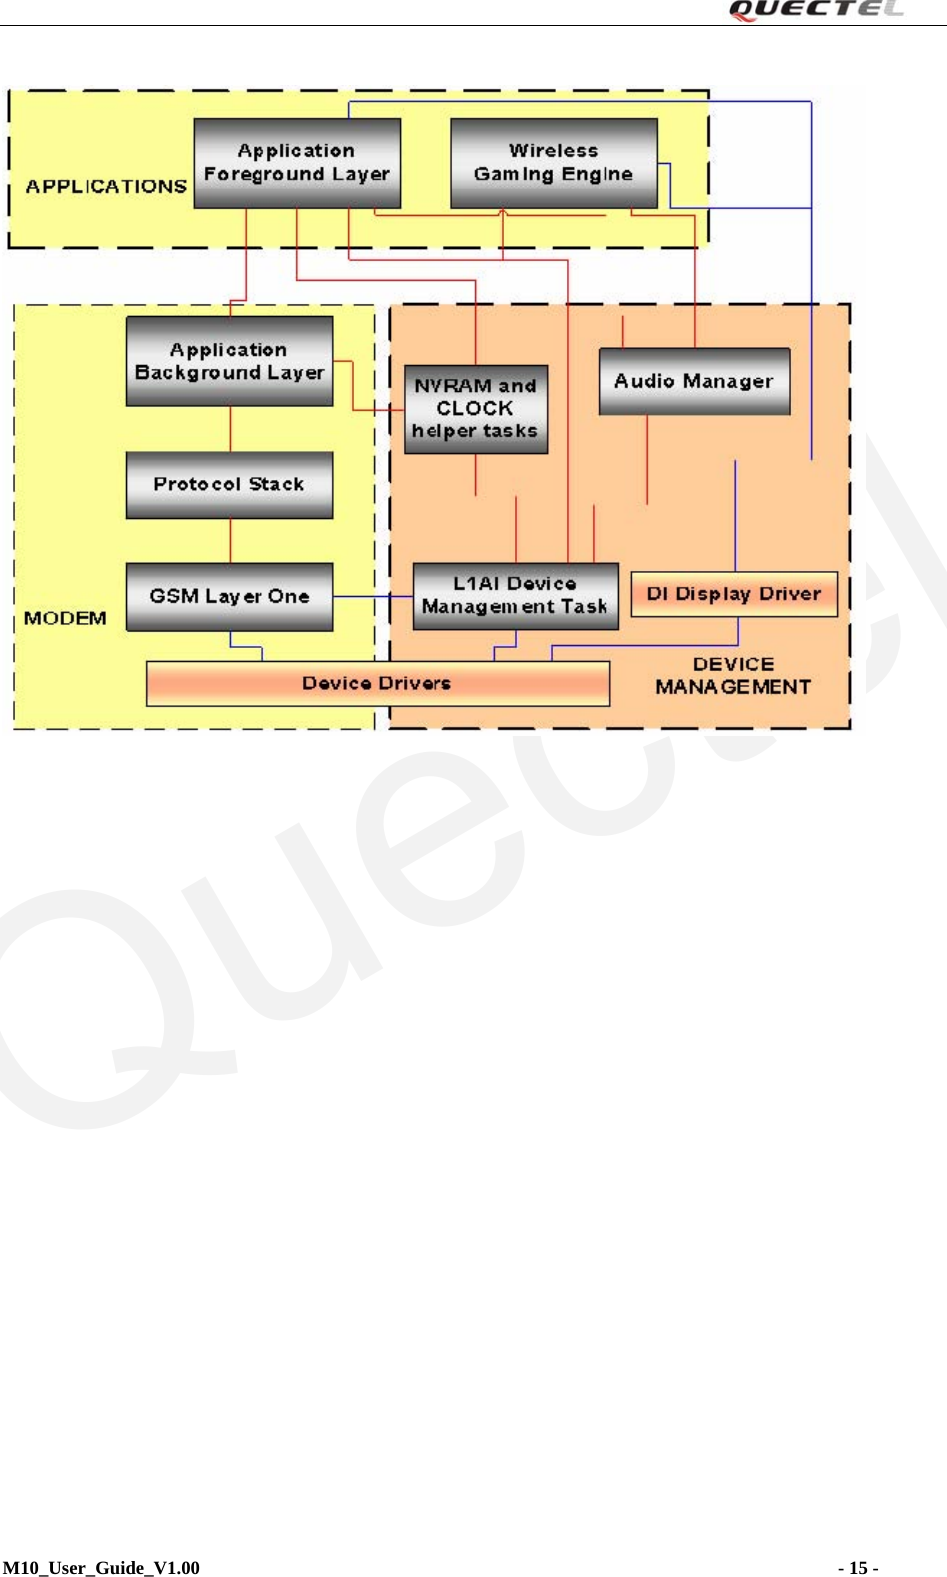 Quectel                                                               M10_User_Guide_V1.00                                                                    - 15 -   